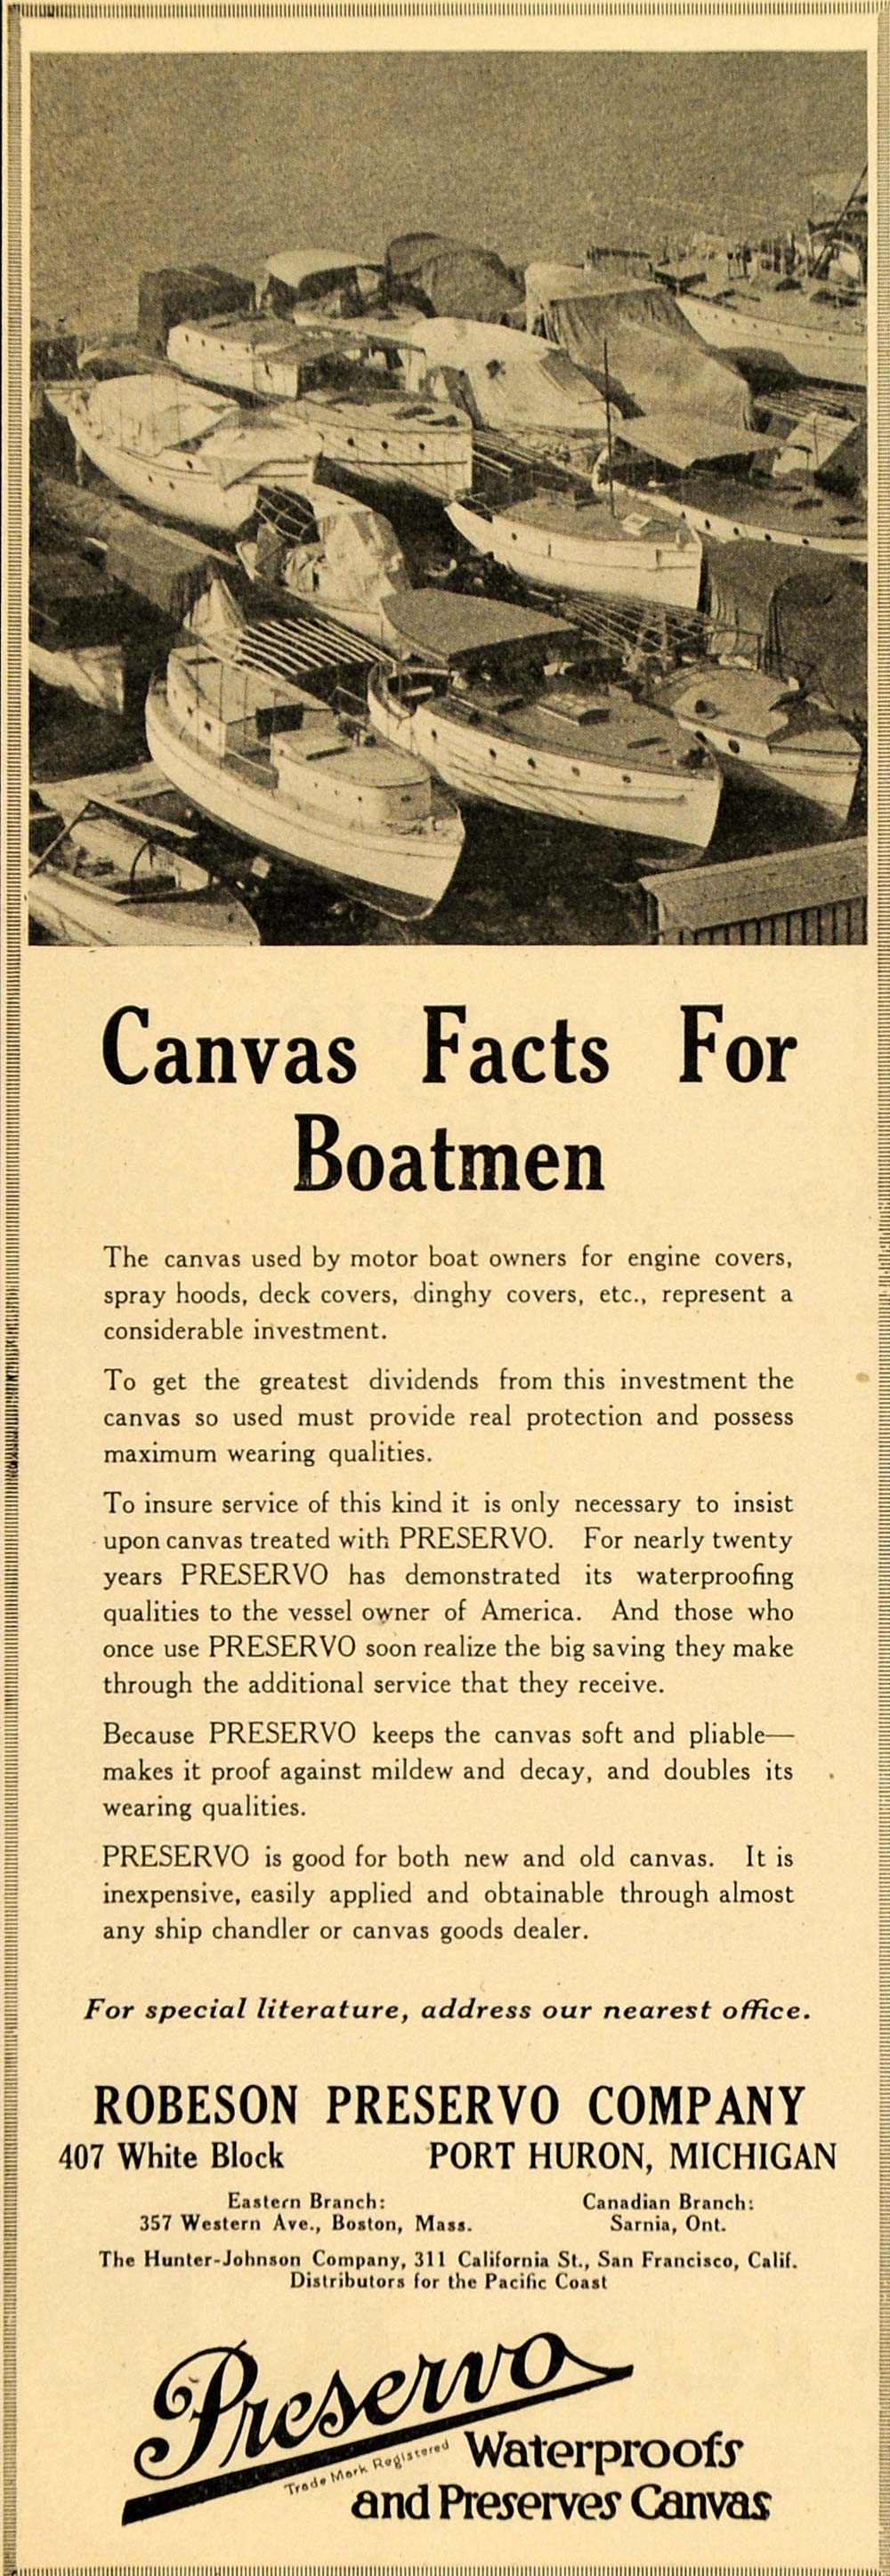 1919 Ad Robeson Preservo Waterproof Canvas Marina Boats - ORIGINAL MB1